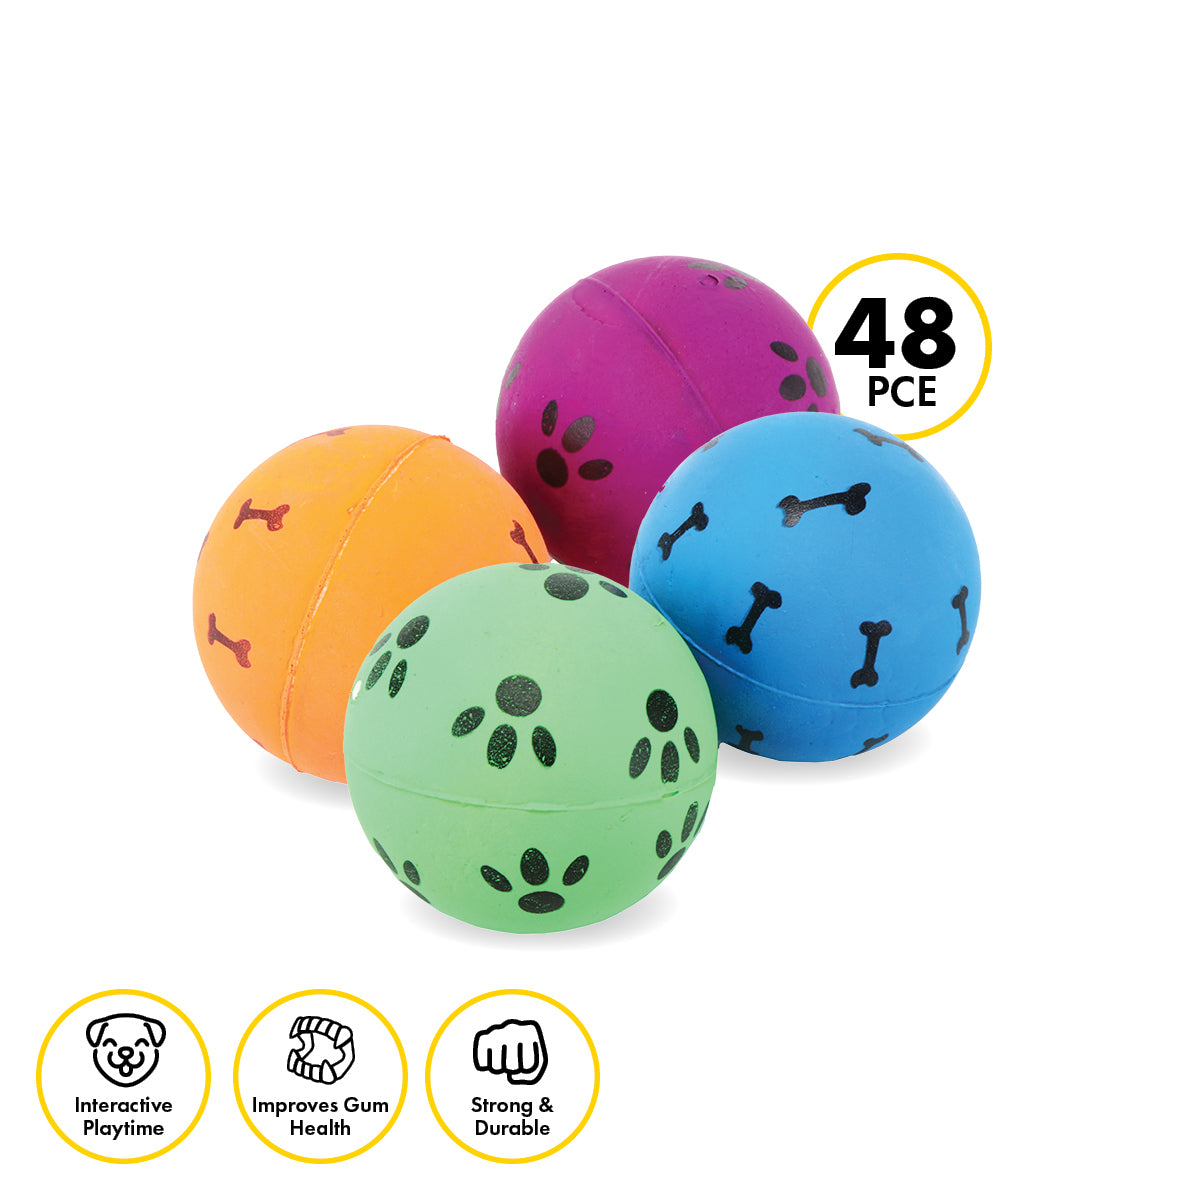 Pet Basic 48PCE Rubber Fetch Balls Durable Paw & Bone Printed 5.7cm